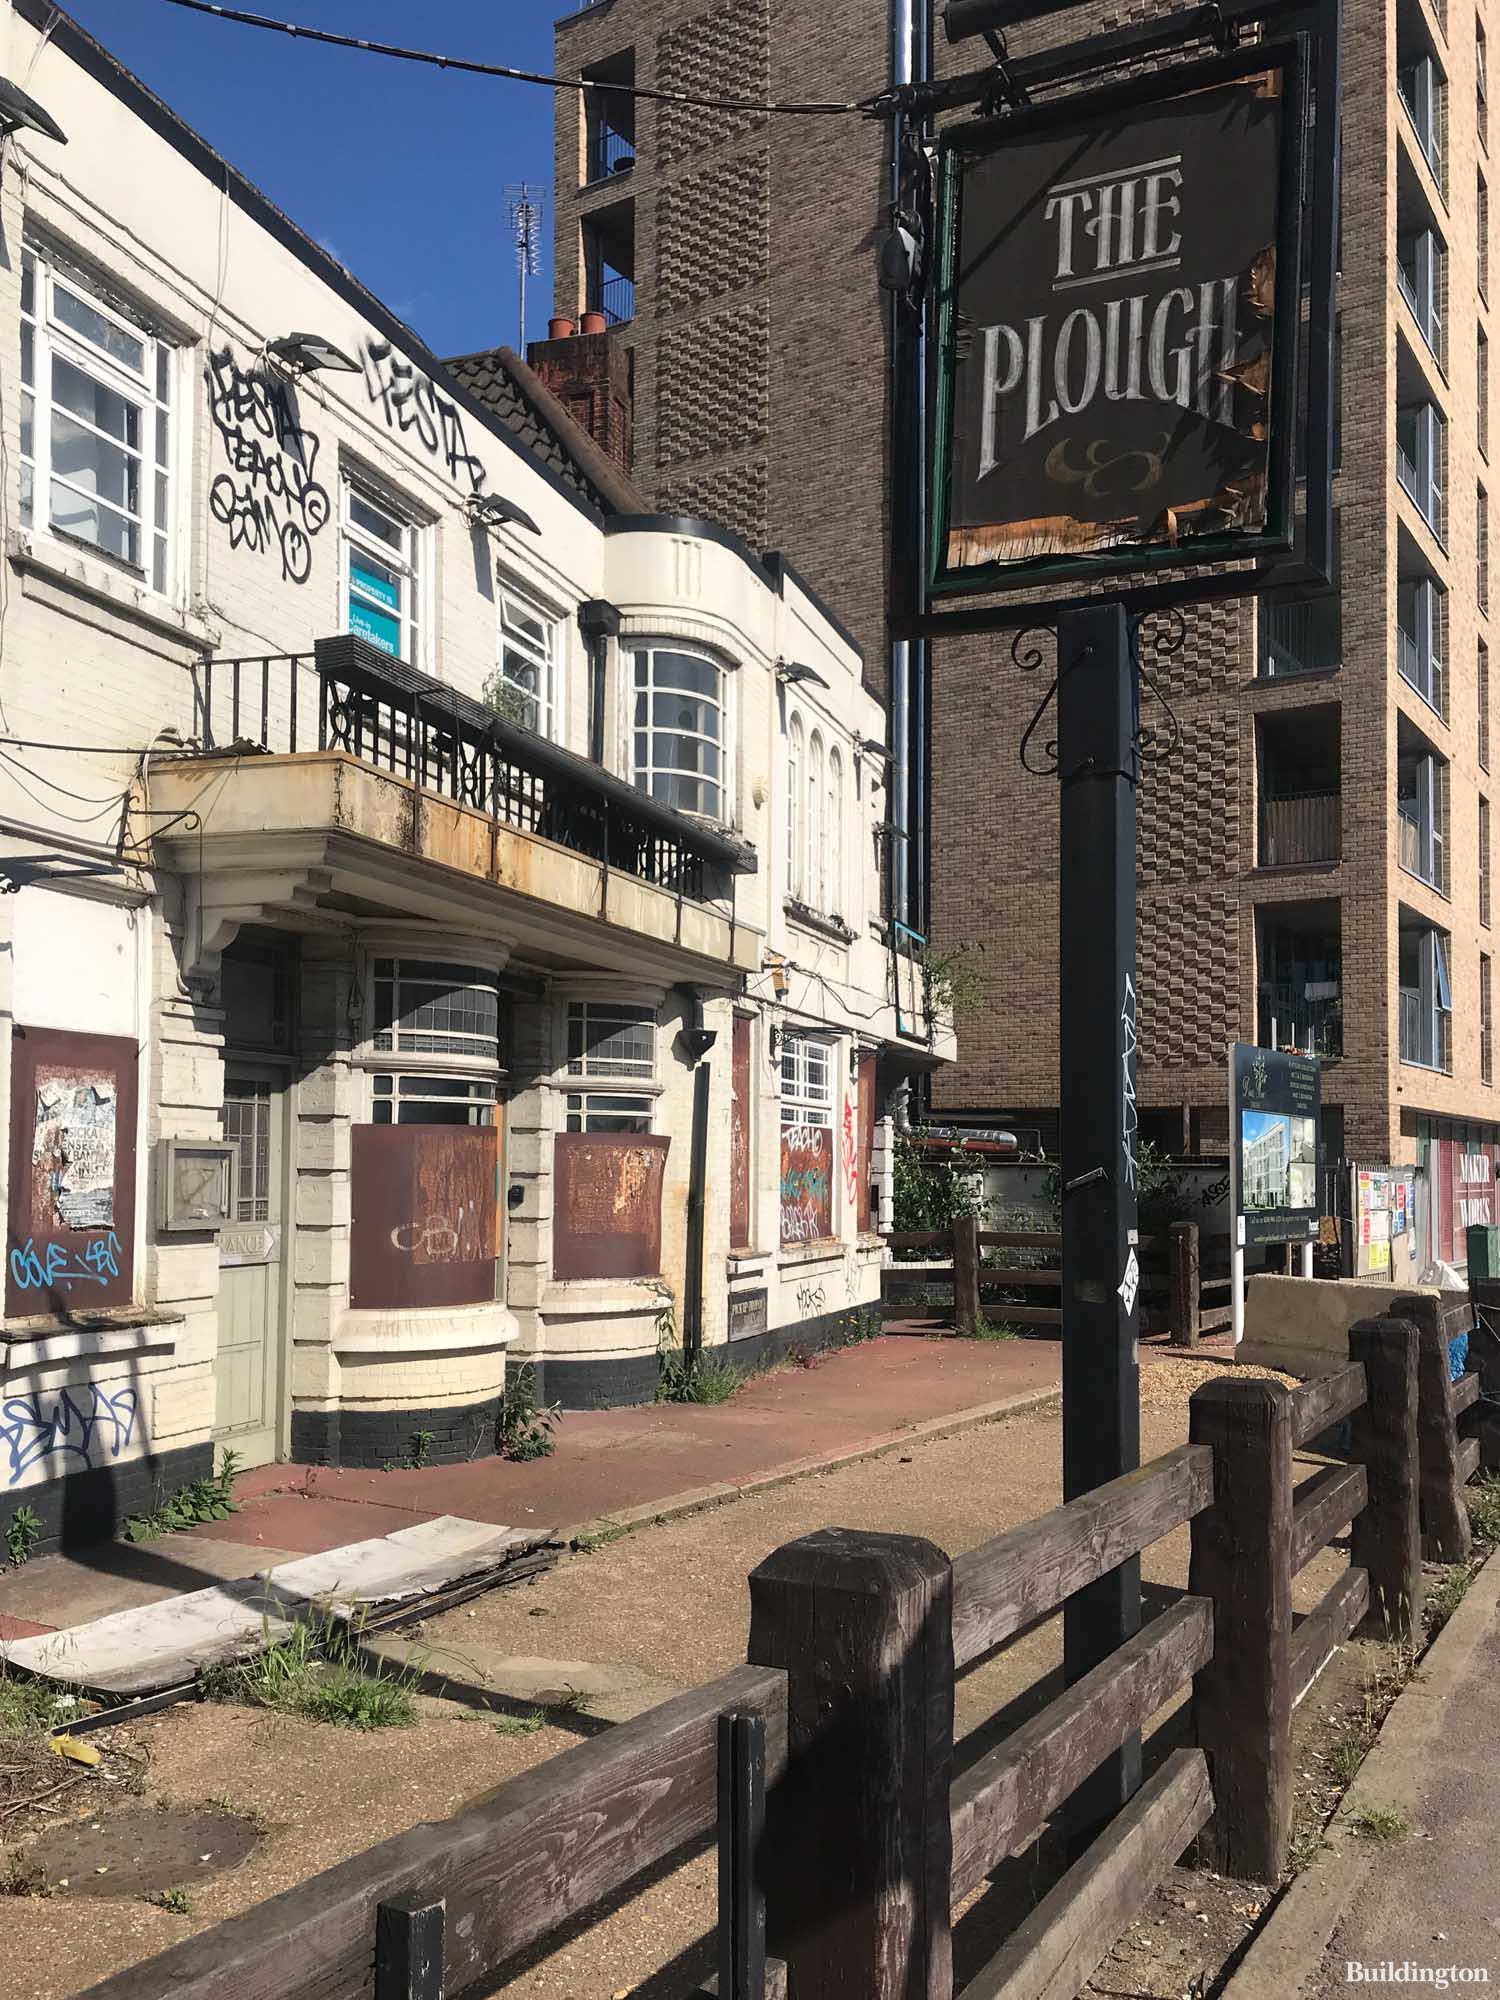 The Plough pub on Ealing Road.